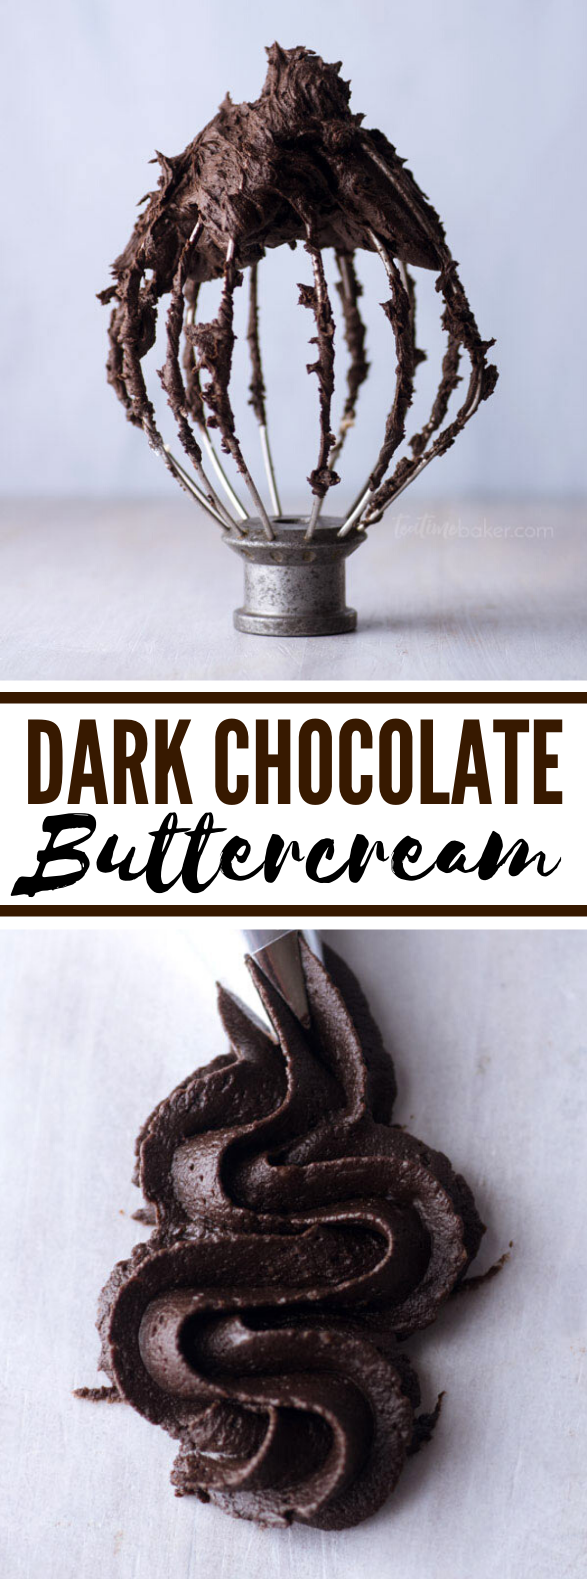 Dark Chocolate Buttercream #desserts #sweets